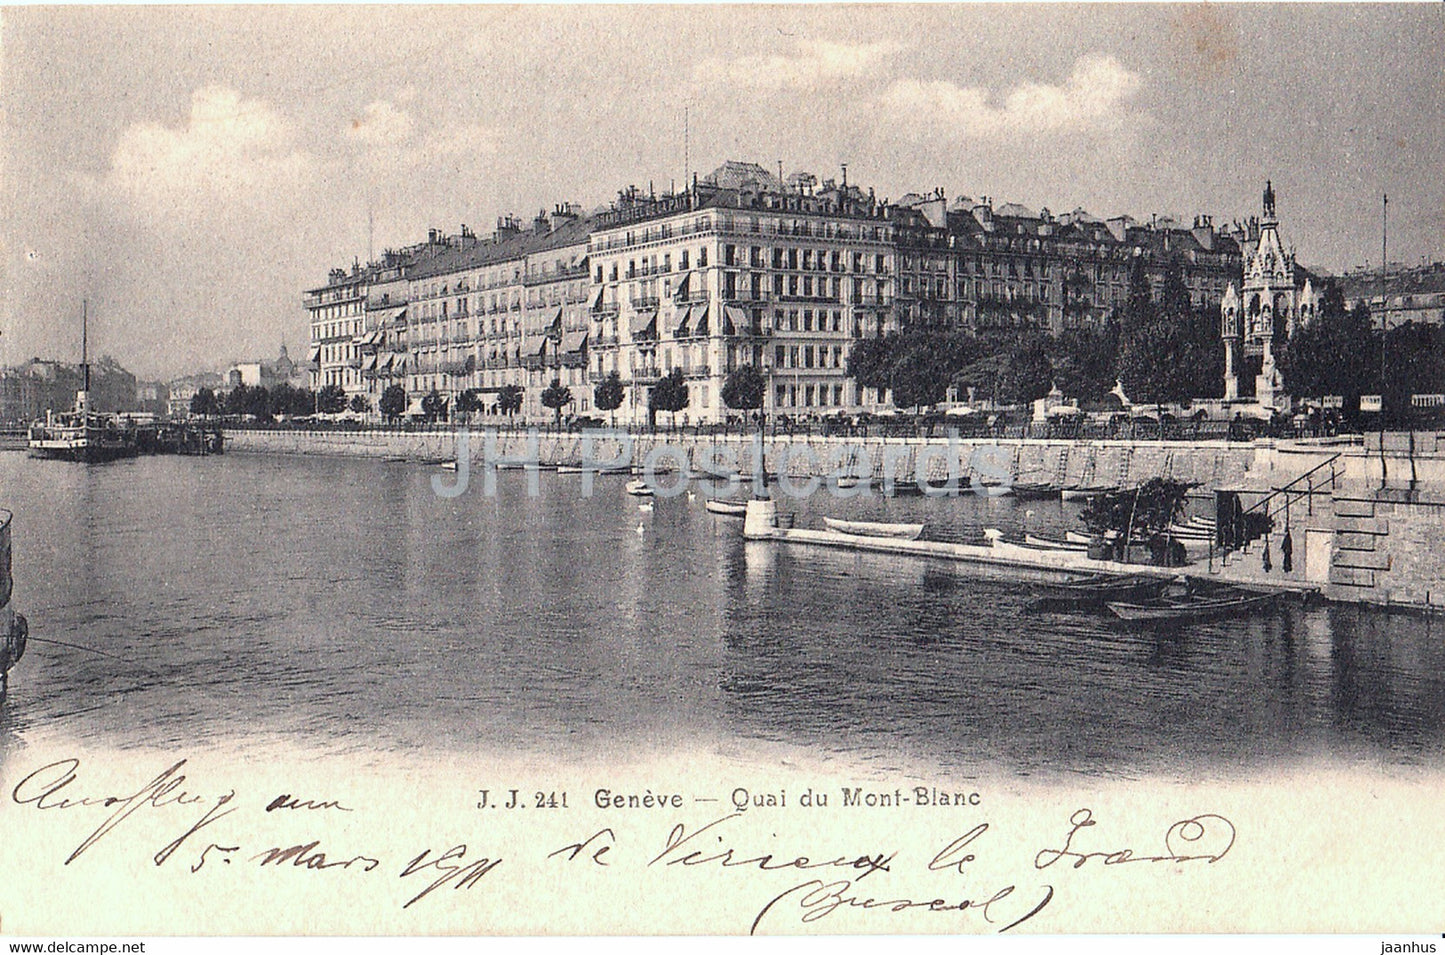 Geneve - Geneva - Quai du Mont Blanc - 241 - old postcard - 1911 - Switzerland - used - JH Postcards